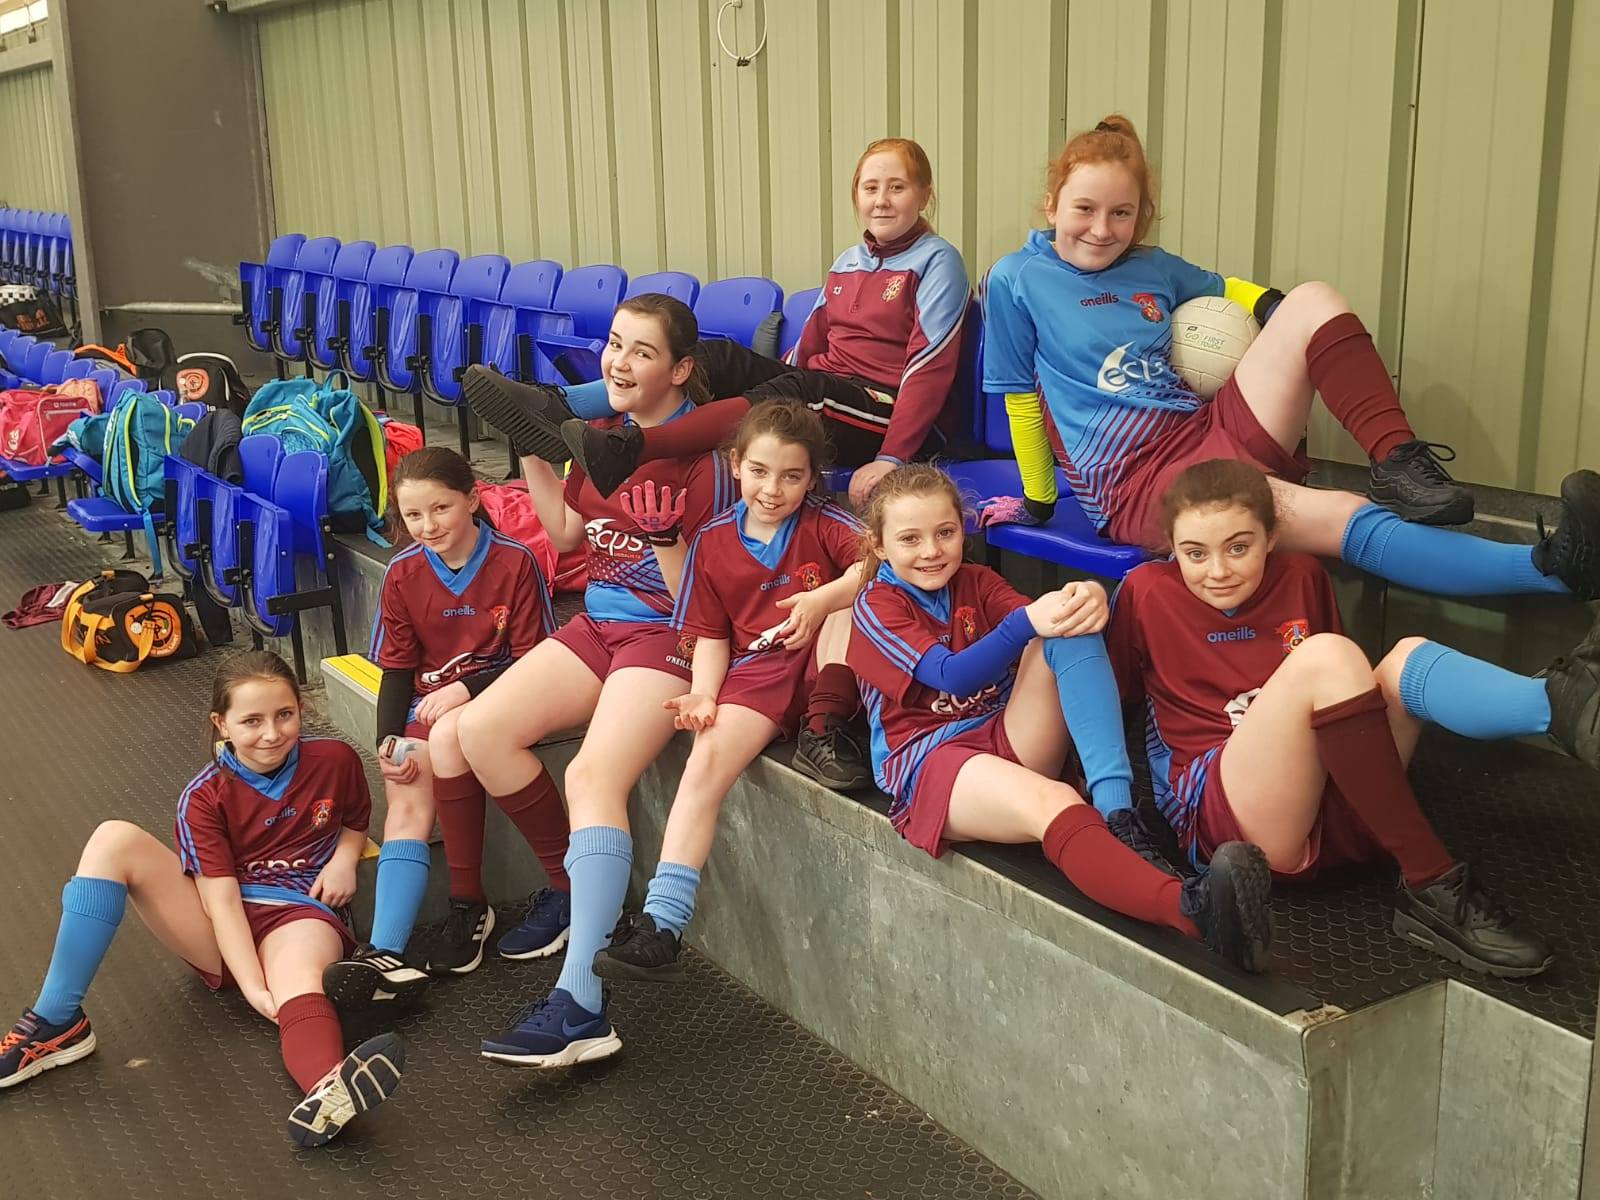 Girls Gaelic team raising awareness for World Down's Syndrome Day